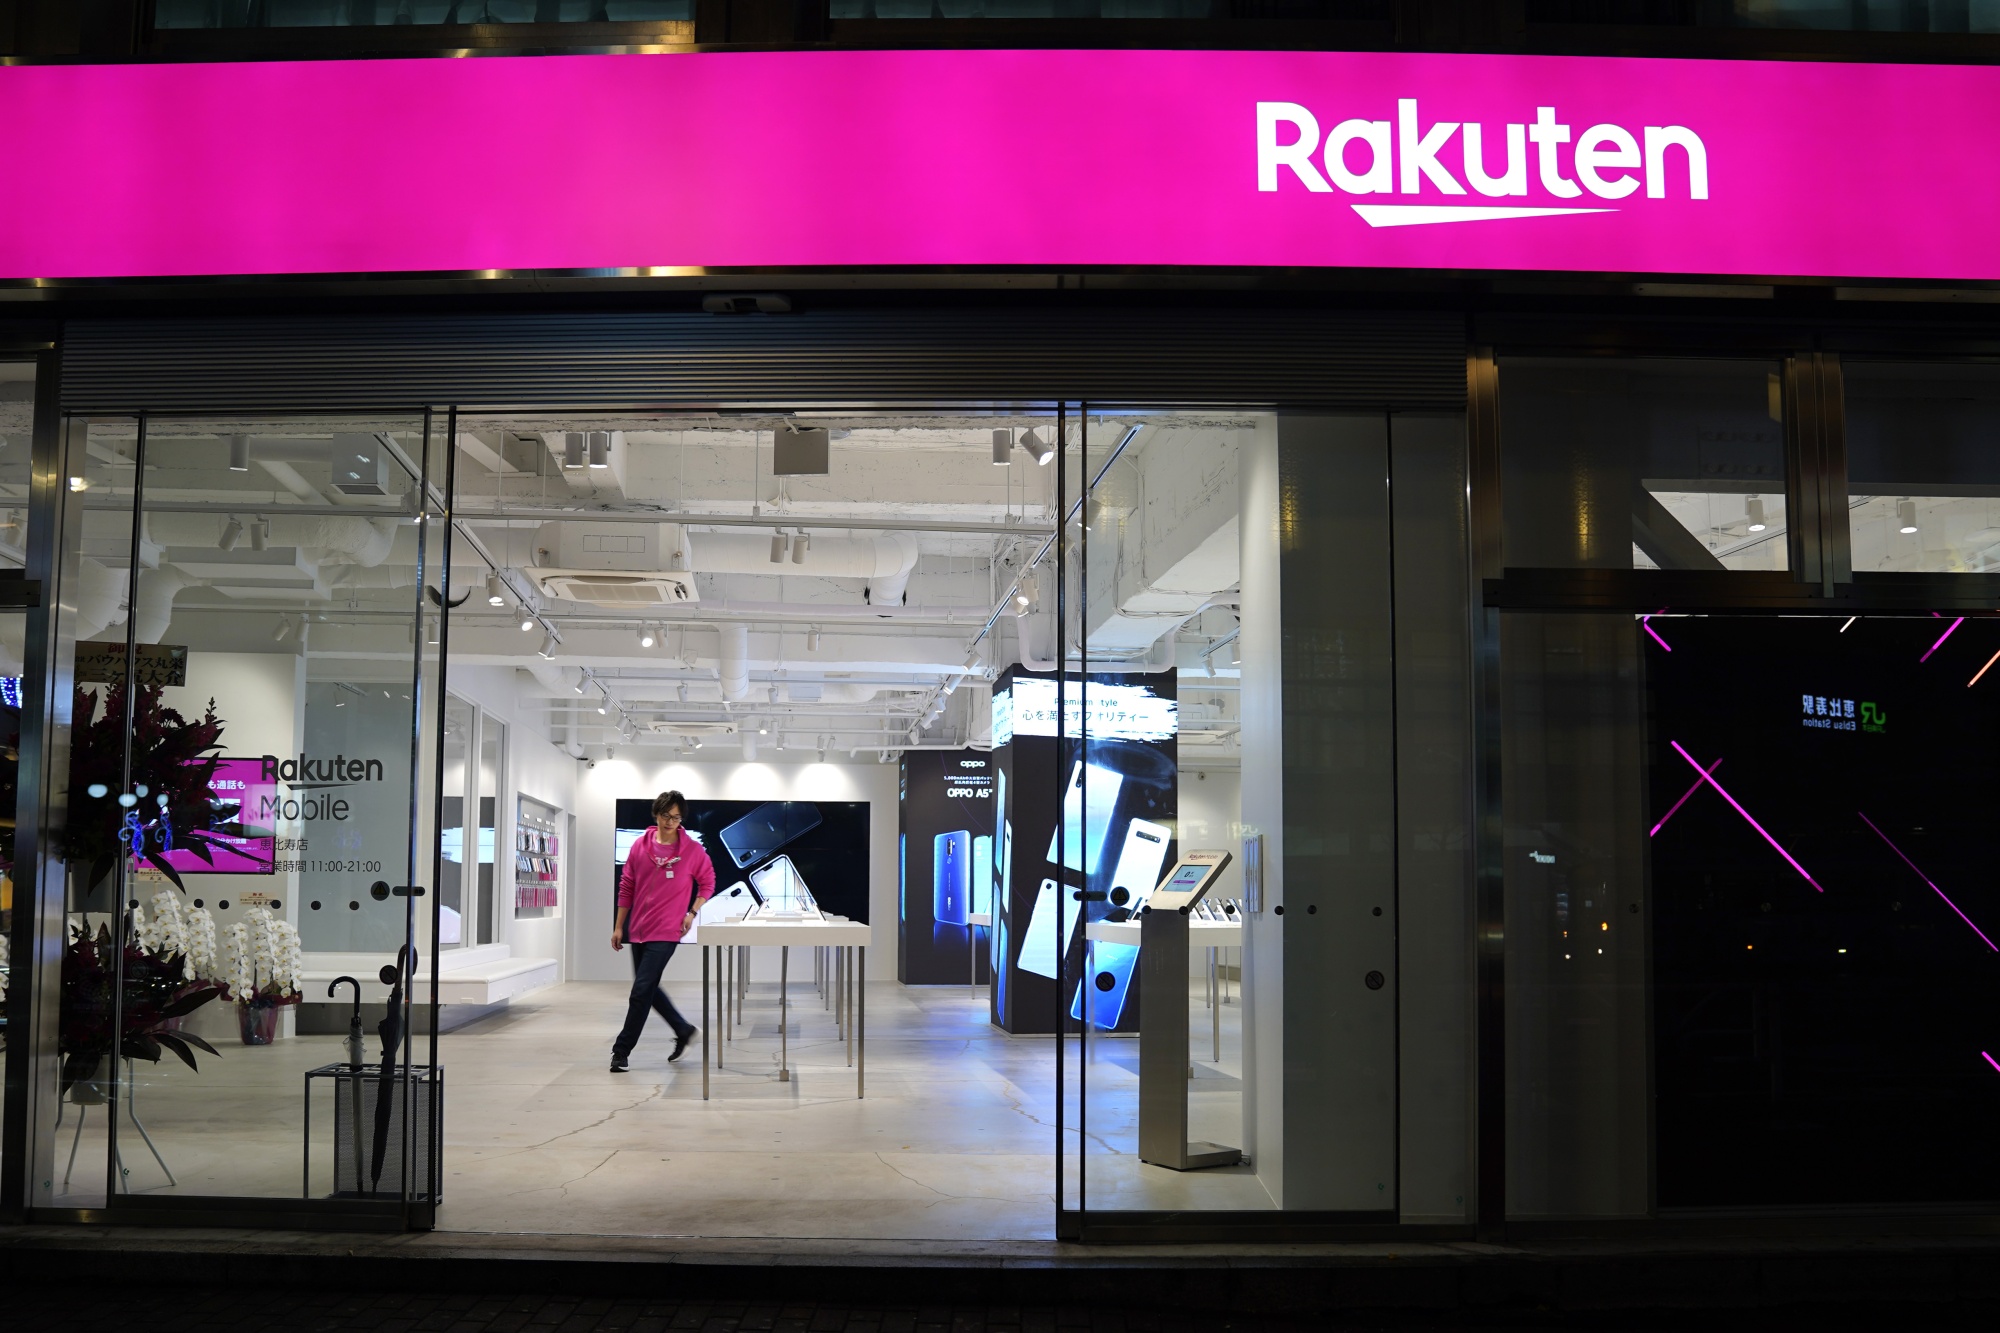 Rakuten's Mobile Unit Lost $887 Million in First Quarter - Bloomberg